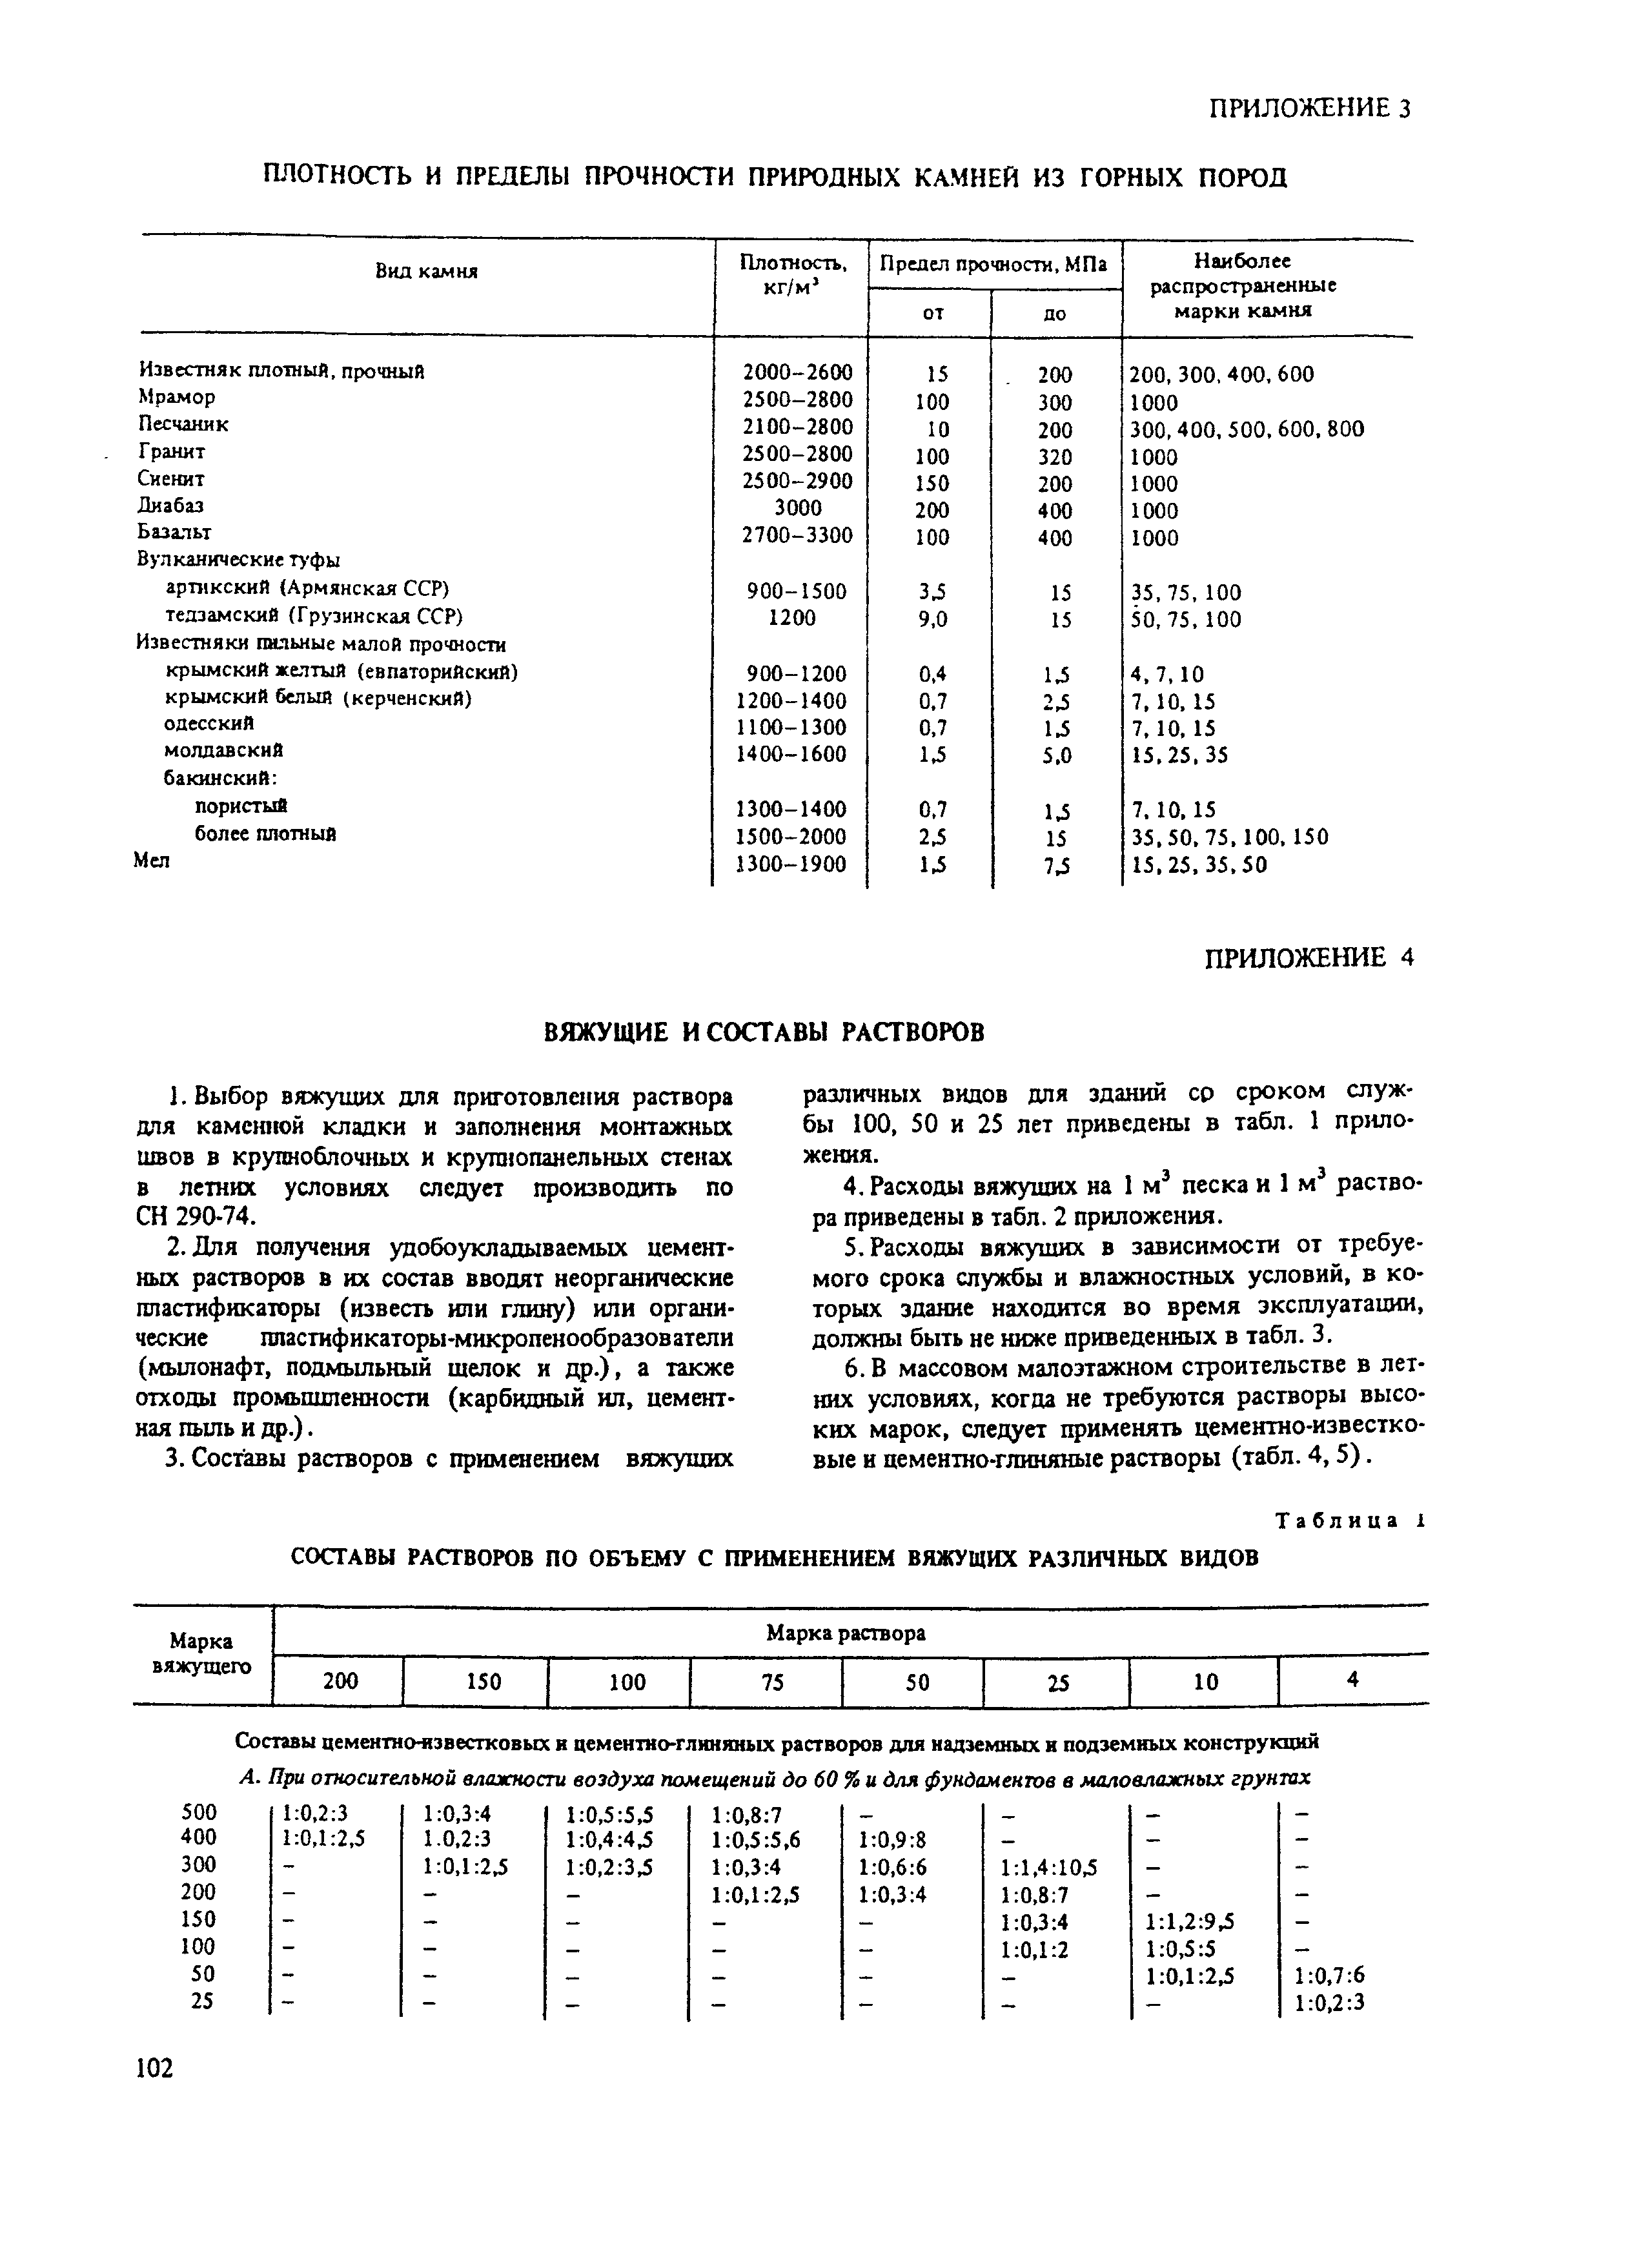 Пособие к СНиП II-22-81